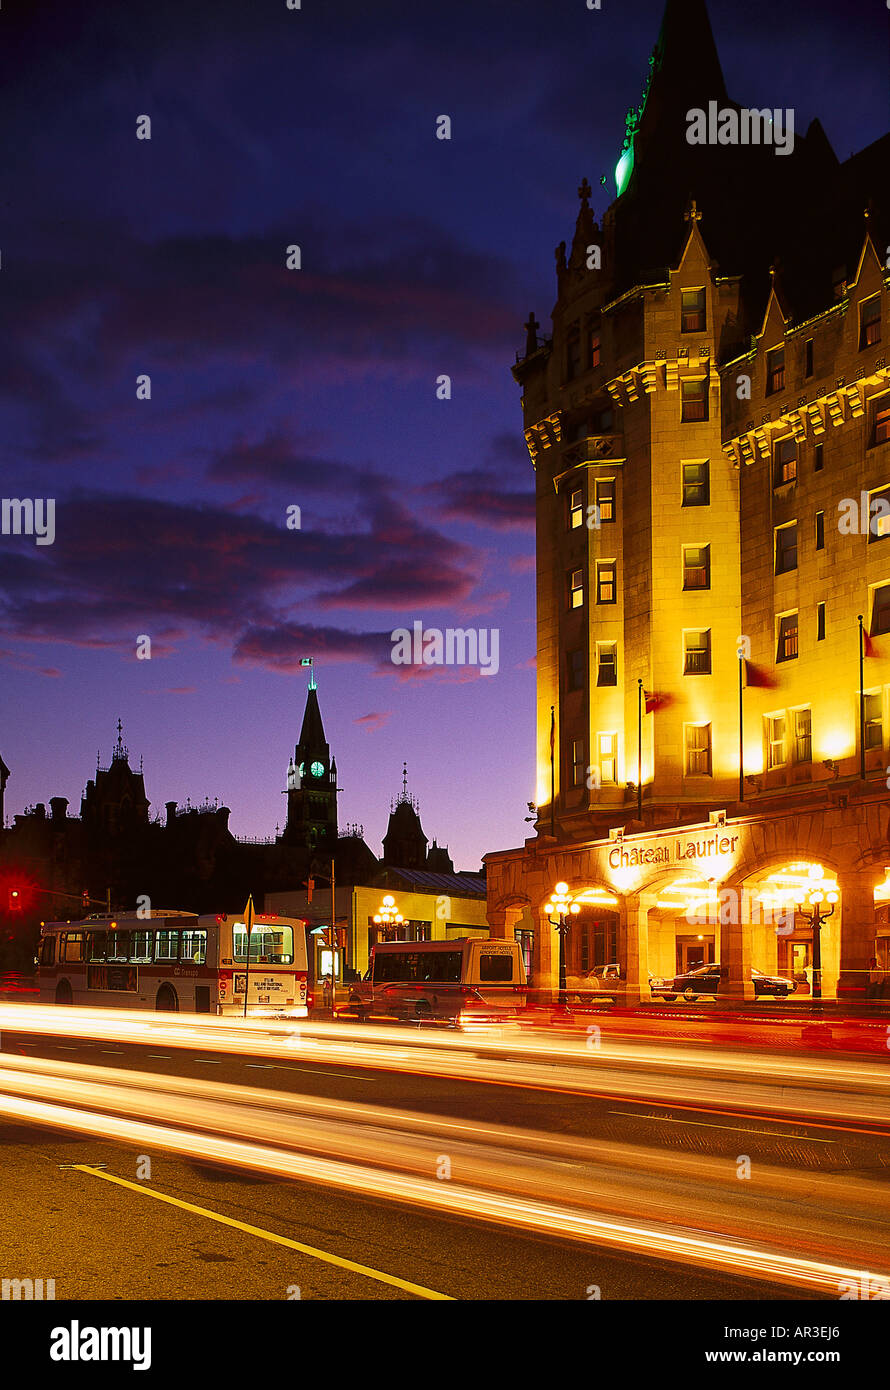 Hotel Chateau Laurier, Parliament hill, Ottawa, Quebec, Canada, North America, America Stock Photo